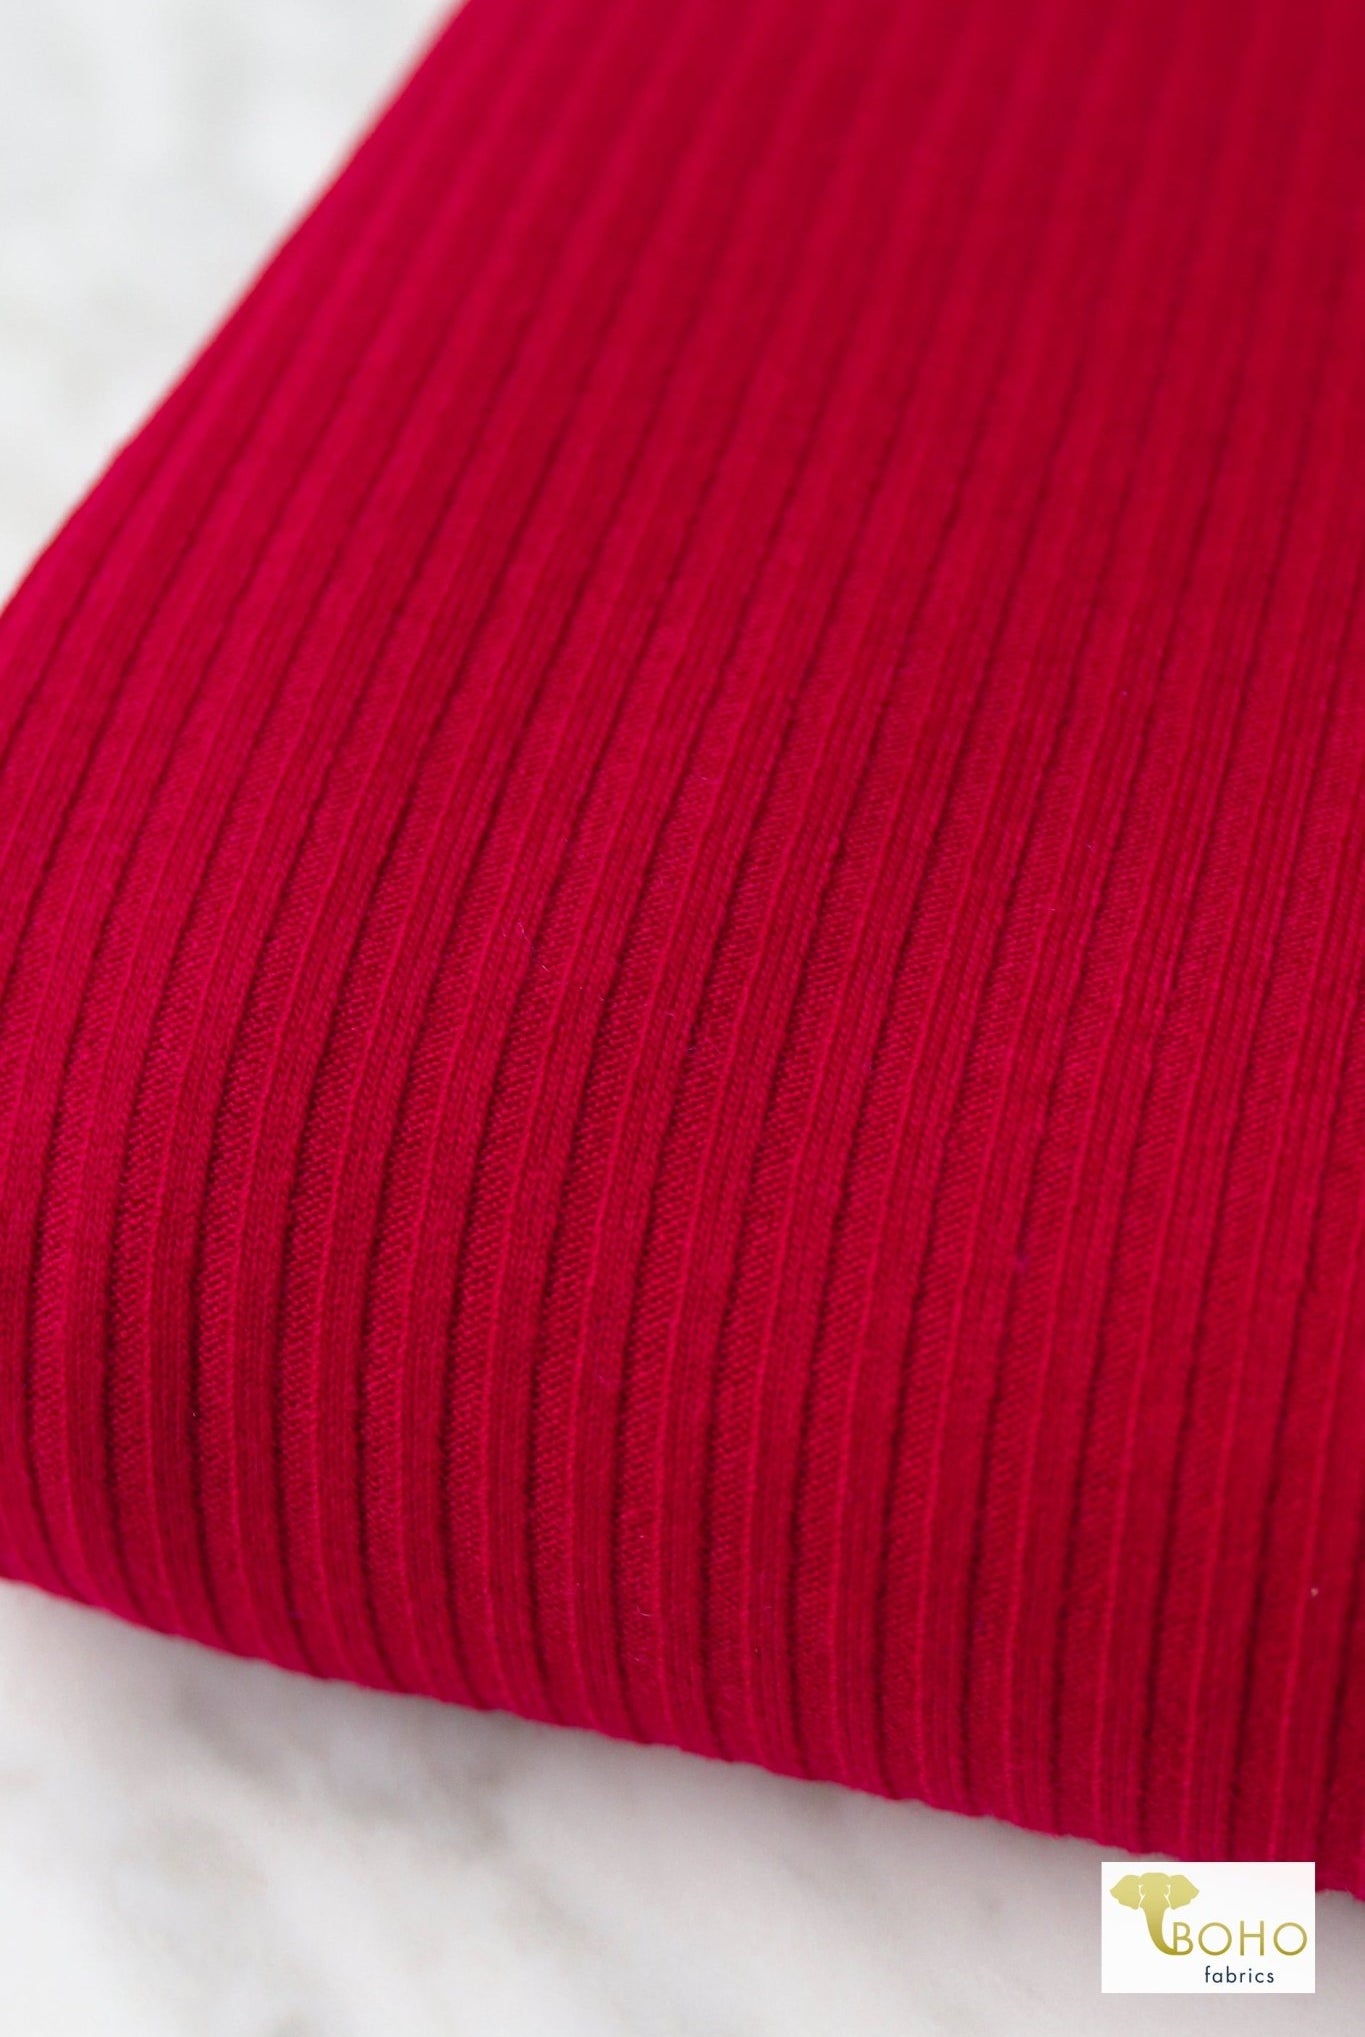 Fiery Red, Rib Knit Fabric - Boho Fabrics